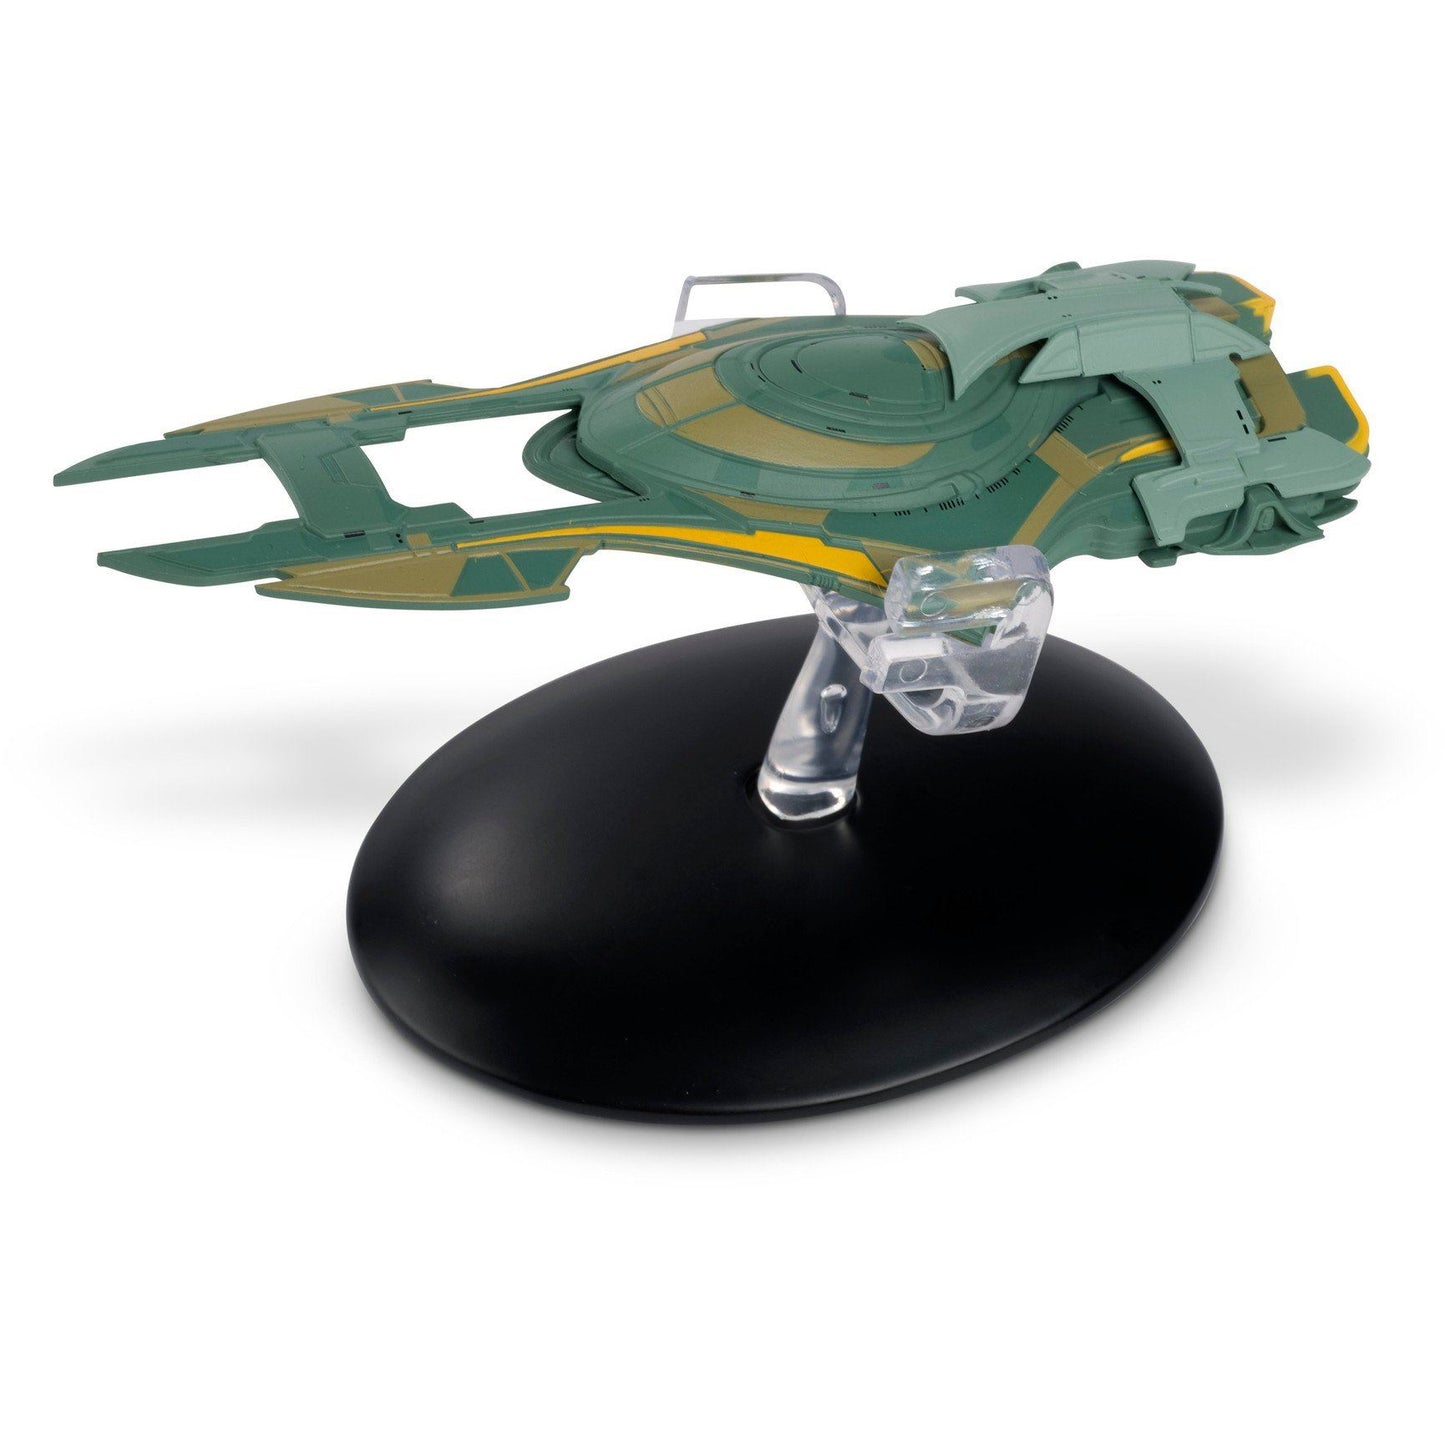 #137 Xindi Humanoid Primate Model Die Cast Ship (Eaglemoss / Star Trek)